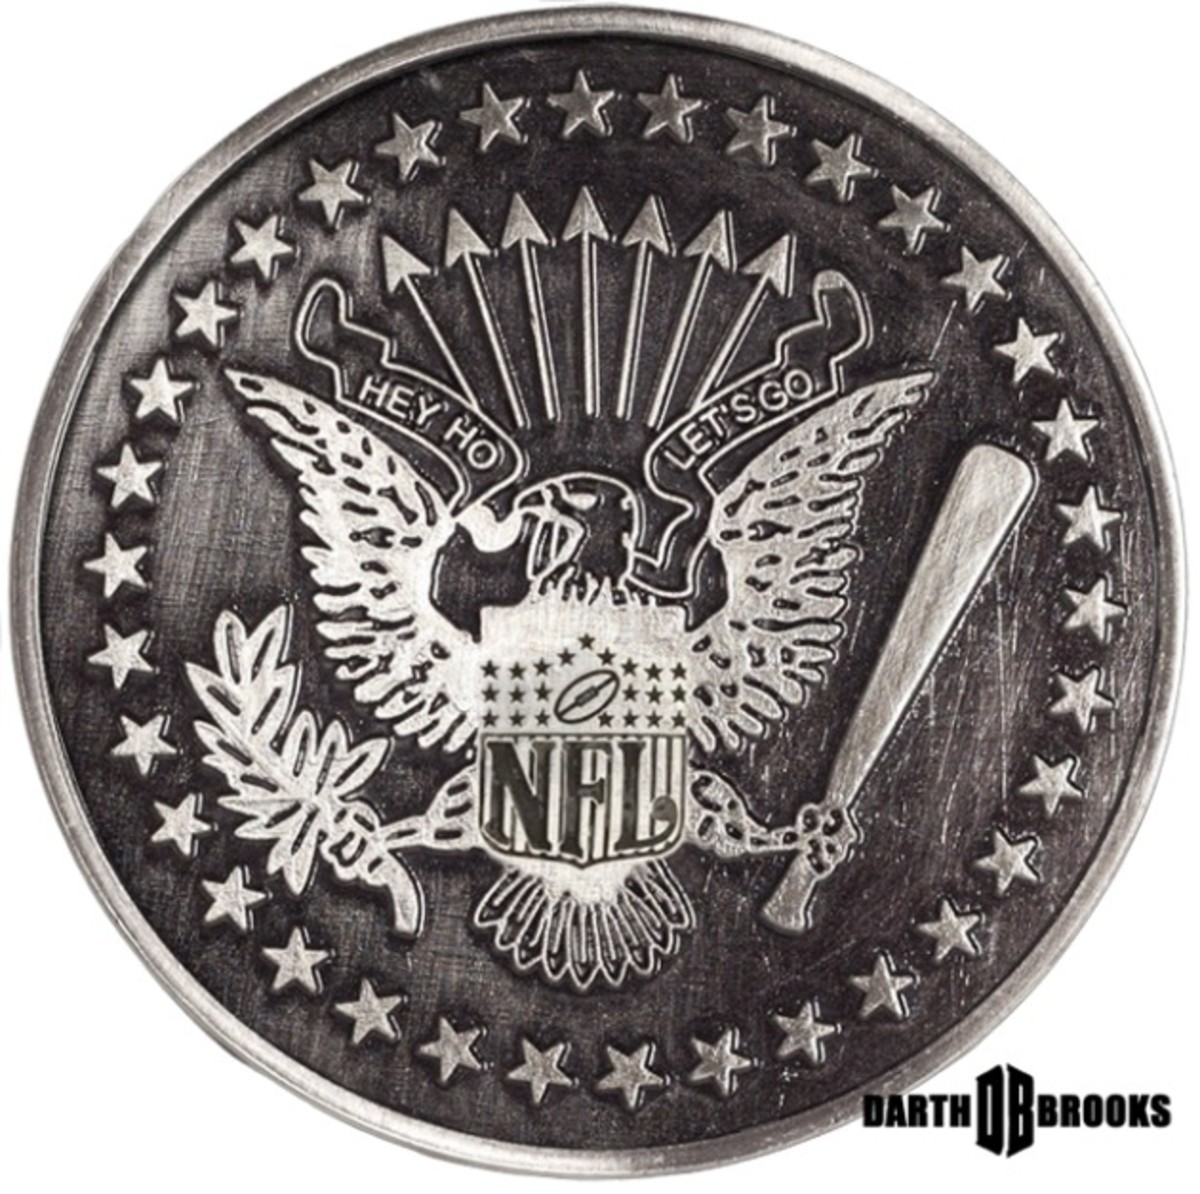 the-ramones-coin.jpg